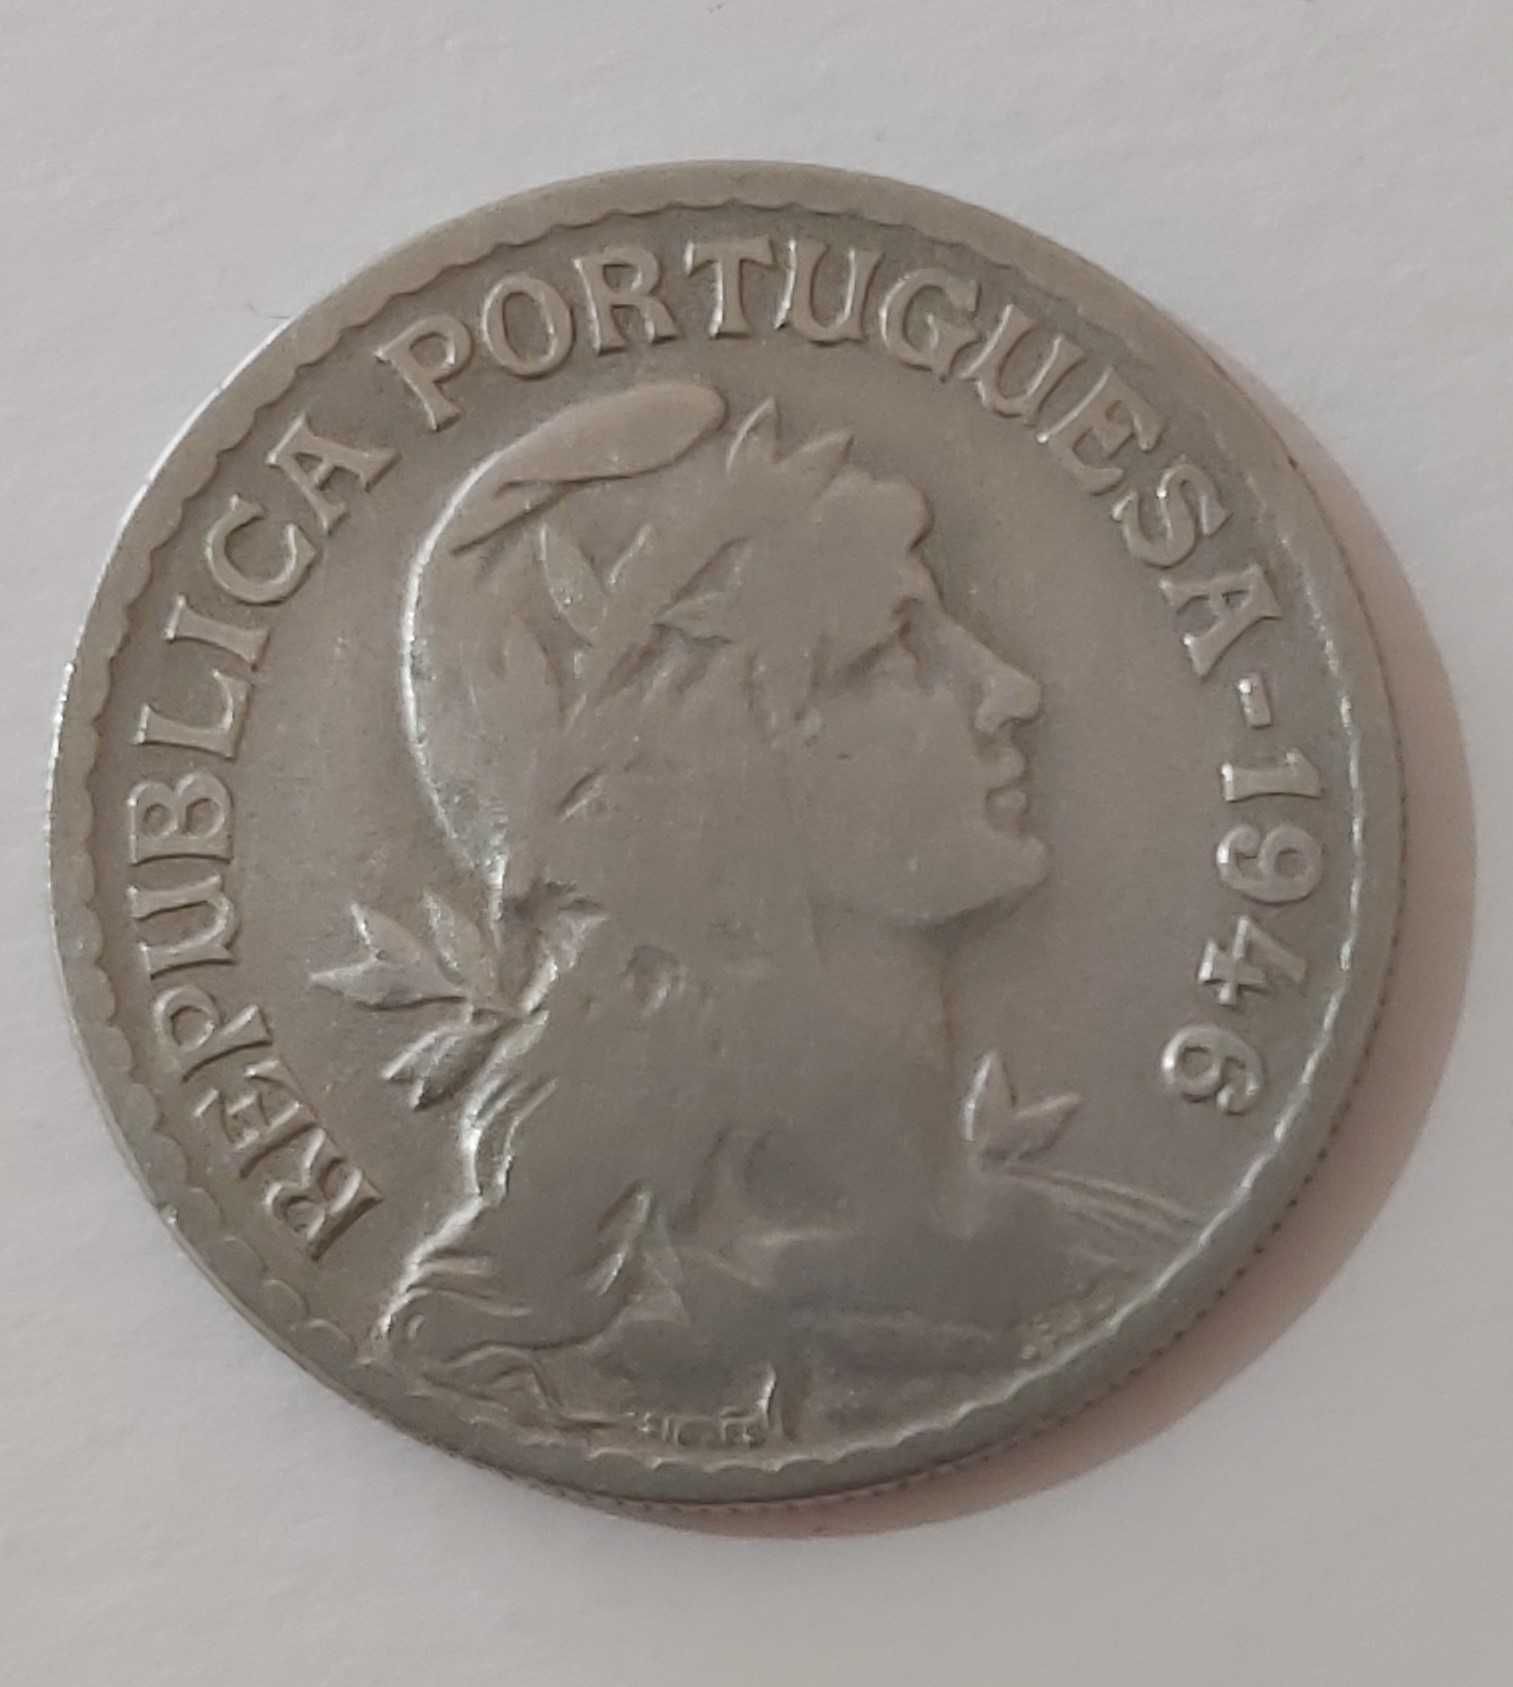 1 Escudo de 1946 Republica Portuguesa